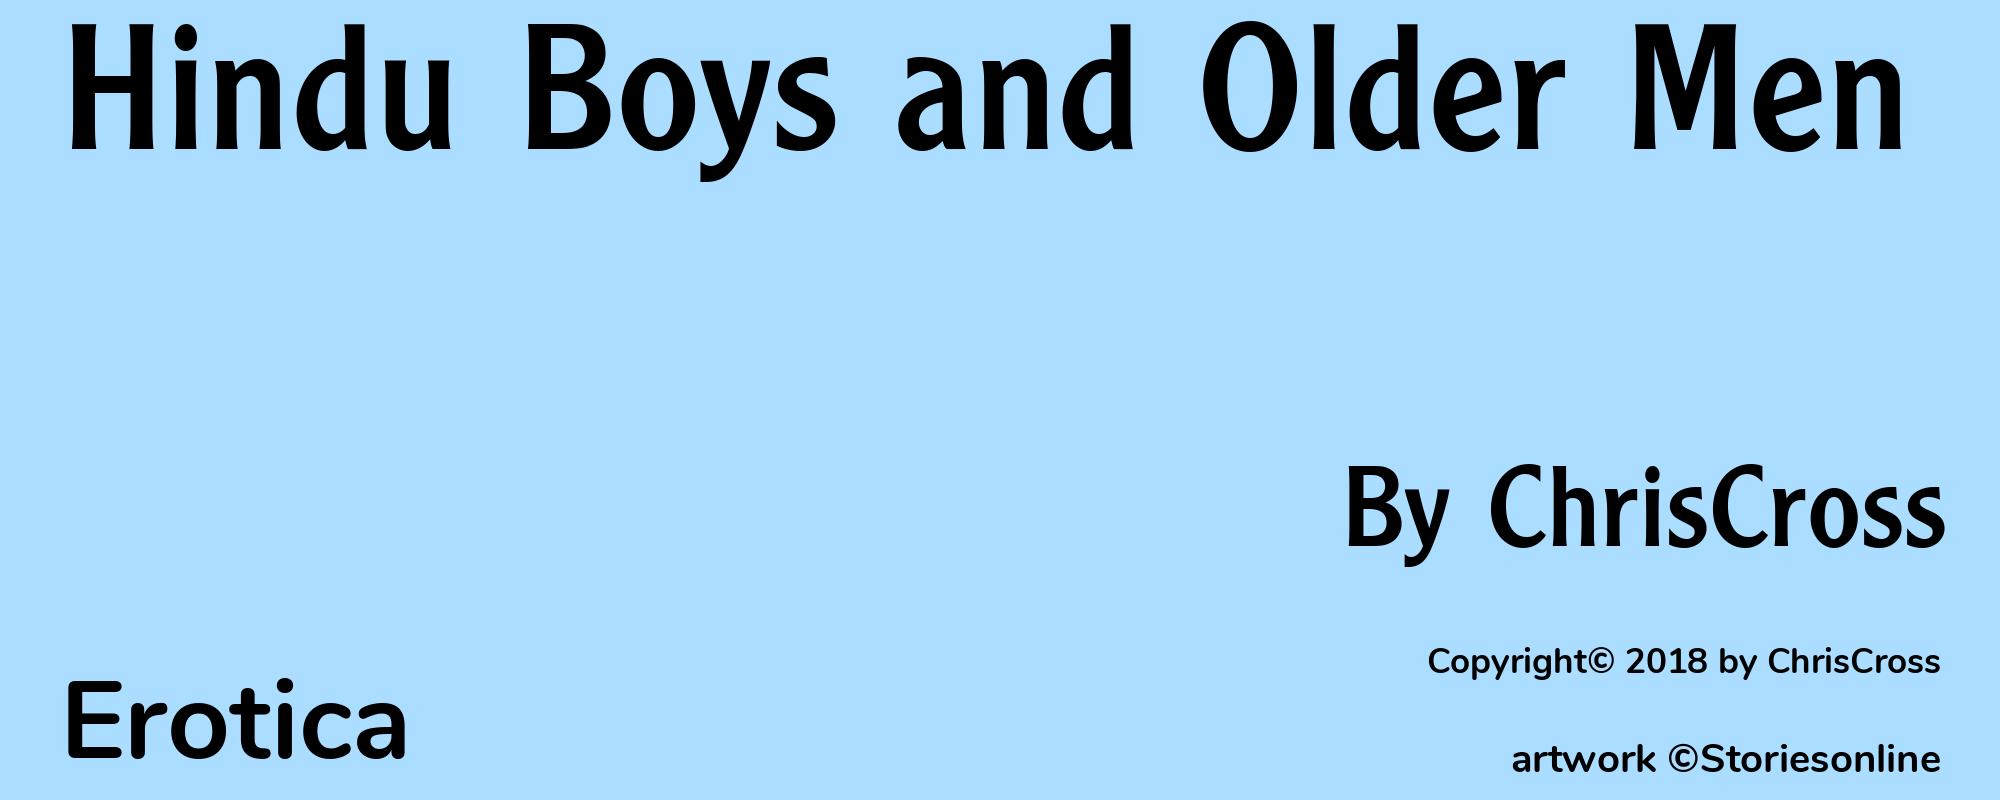 Hindu Boys and Older Men - Cover